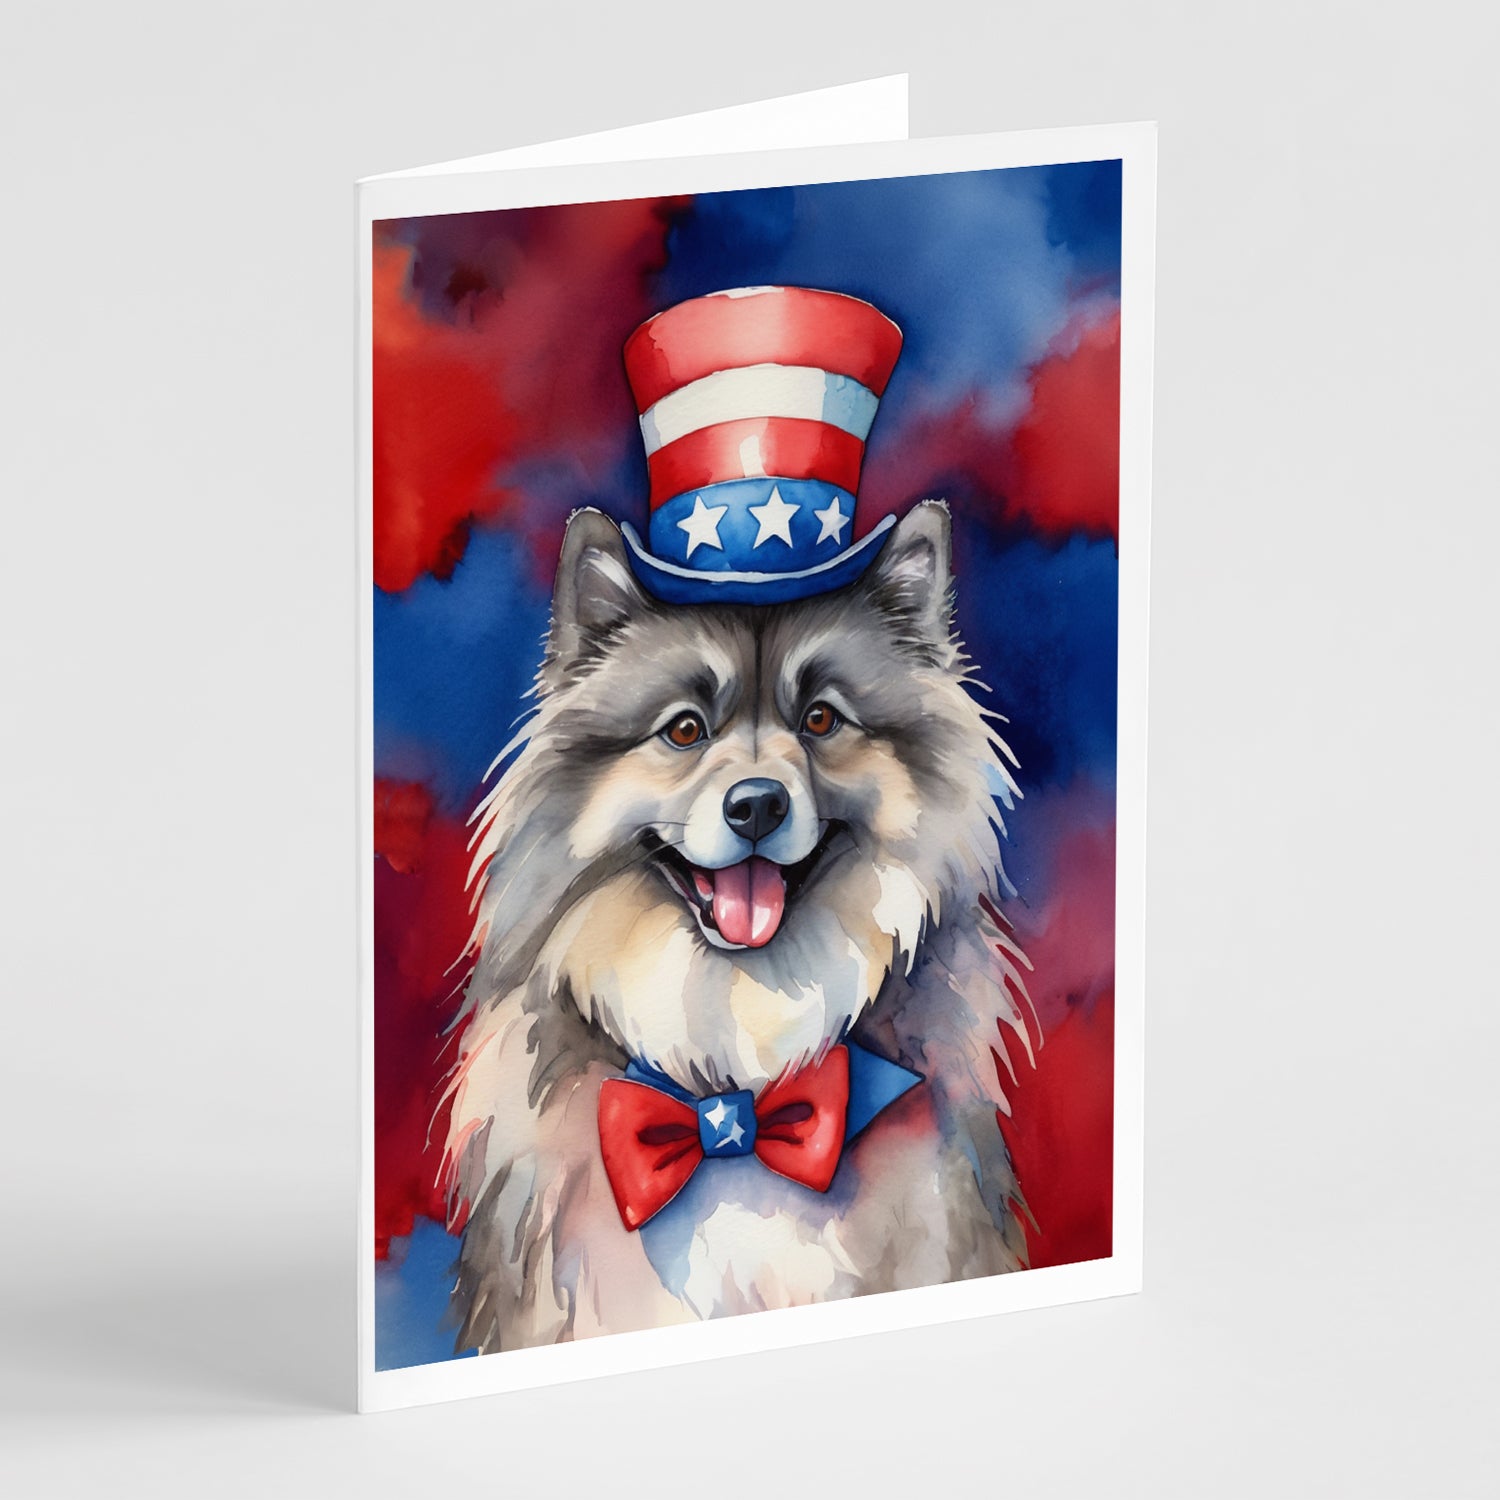 Buy this Keeshond Patriotic American Greeting Cards Pack of 8